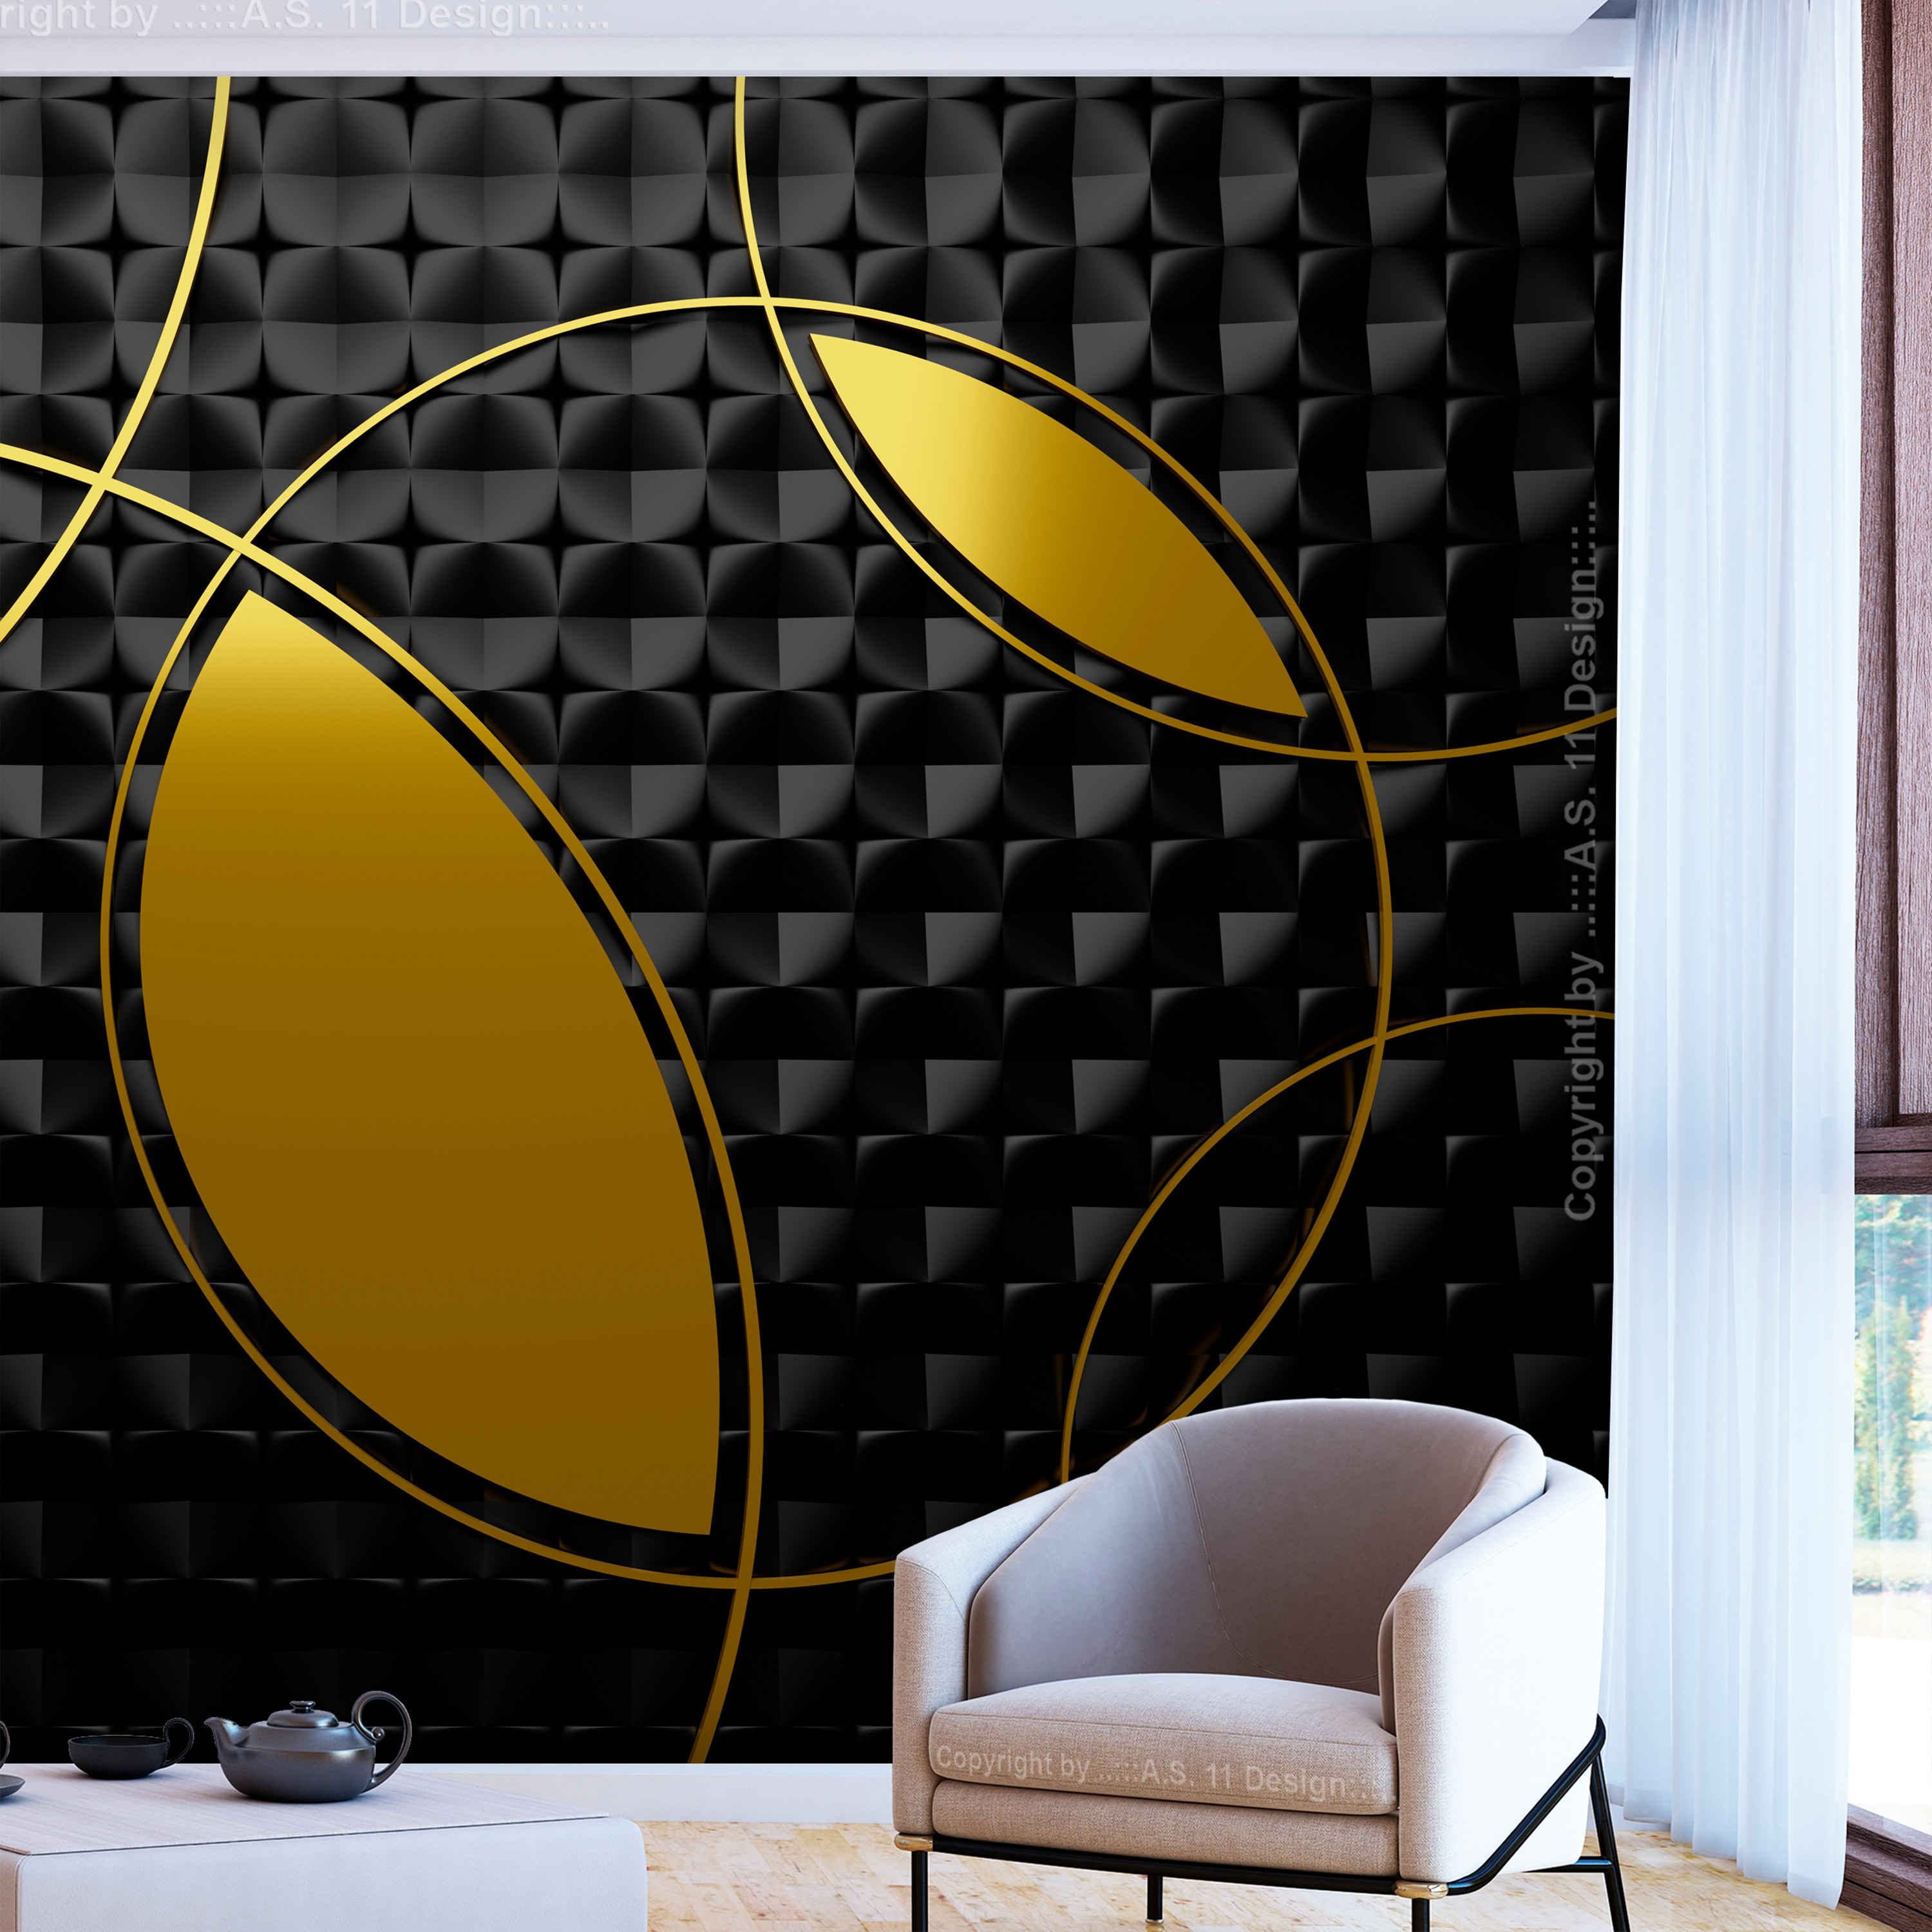 Self-adhesive Wallpaper - Gilding Zones - 98x70